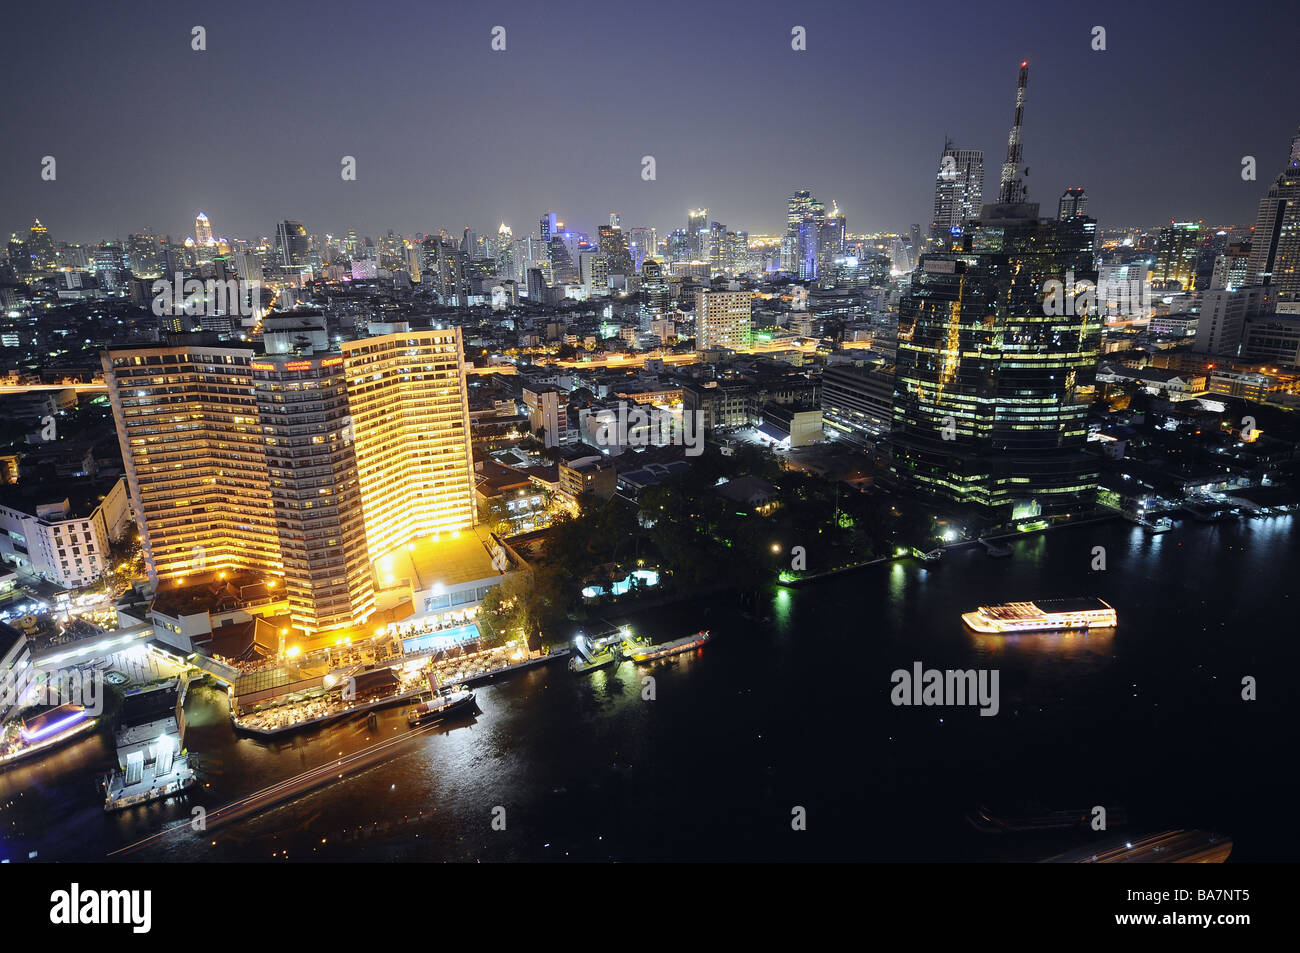 Vue depuis l'hôtel Hilton vers le Bang Rak trimestre près de la rivière, Bangkok, Thaïlande Banque D'Images